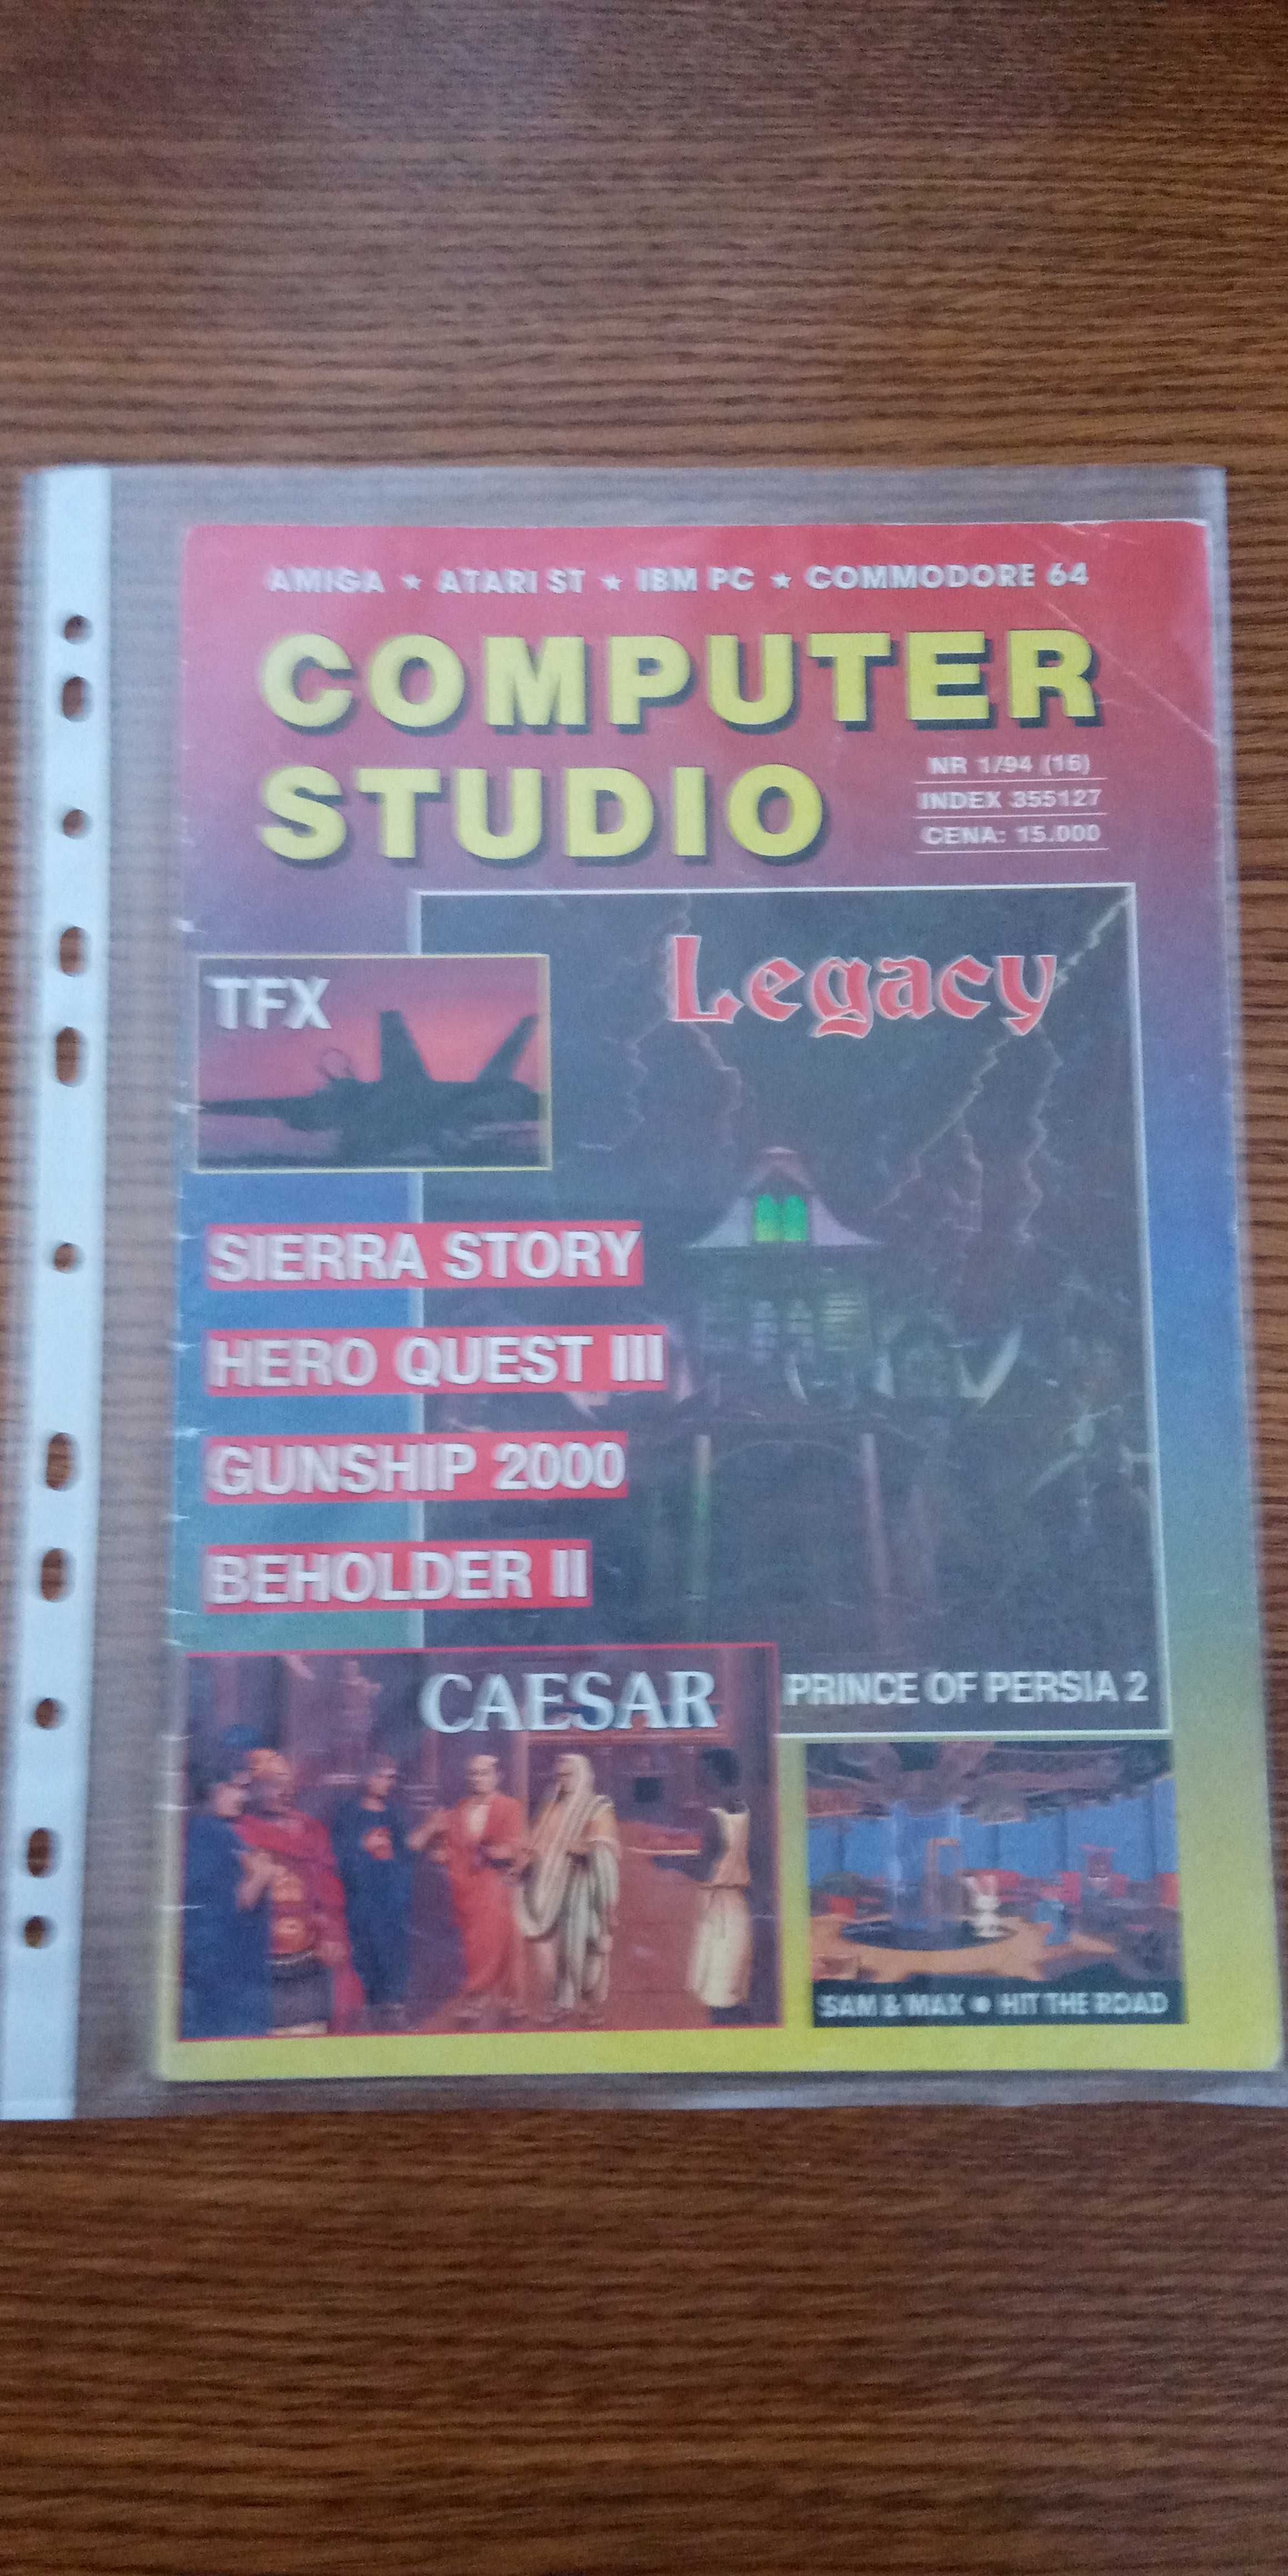 Computer studio 1/94